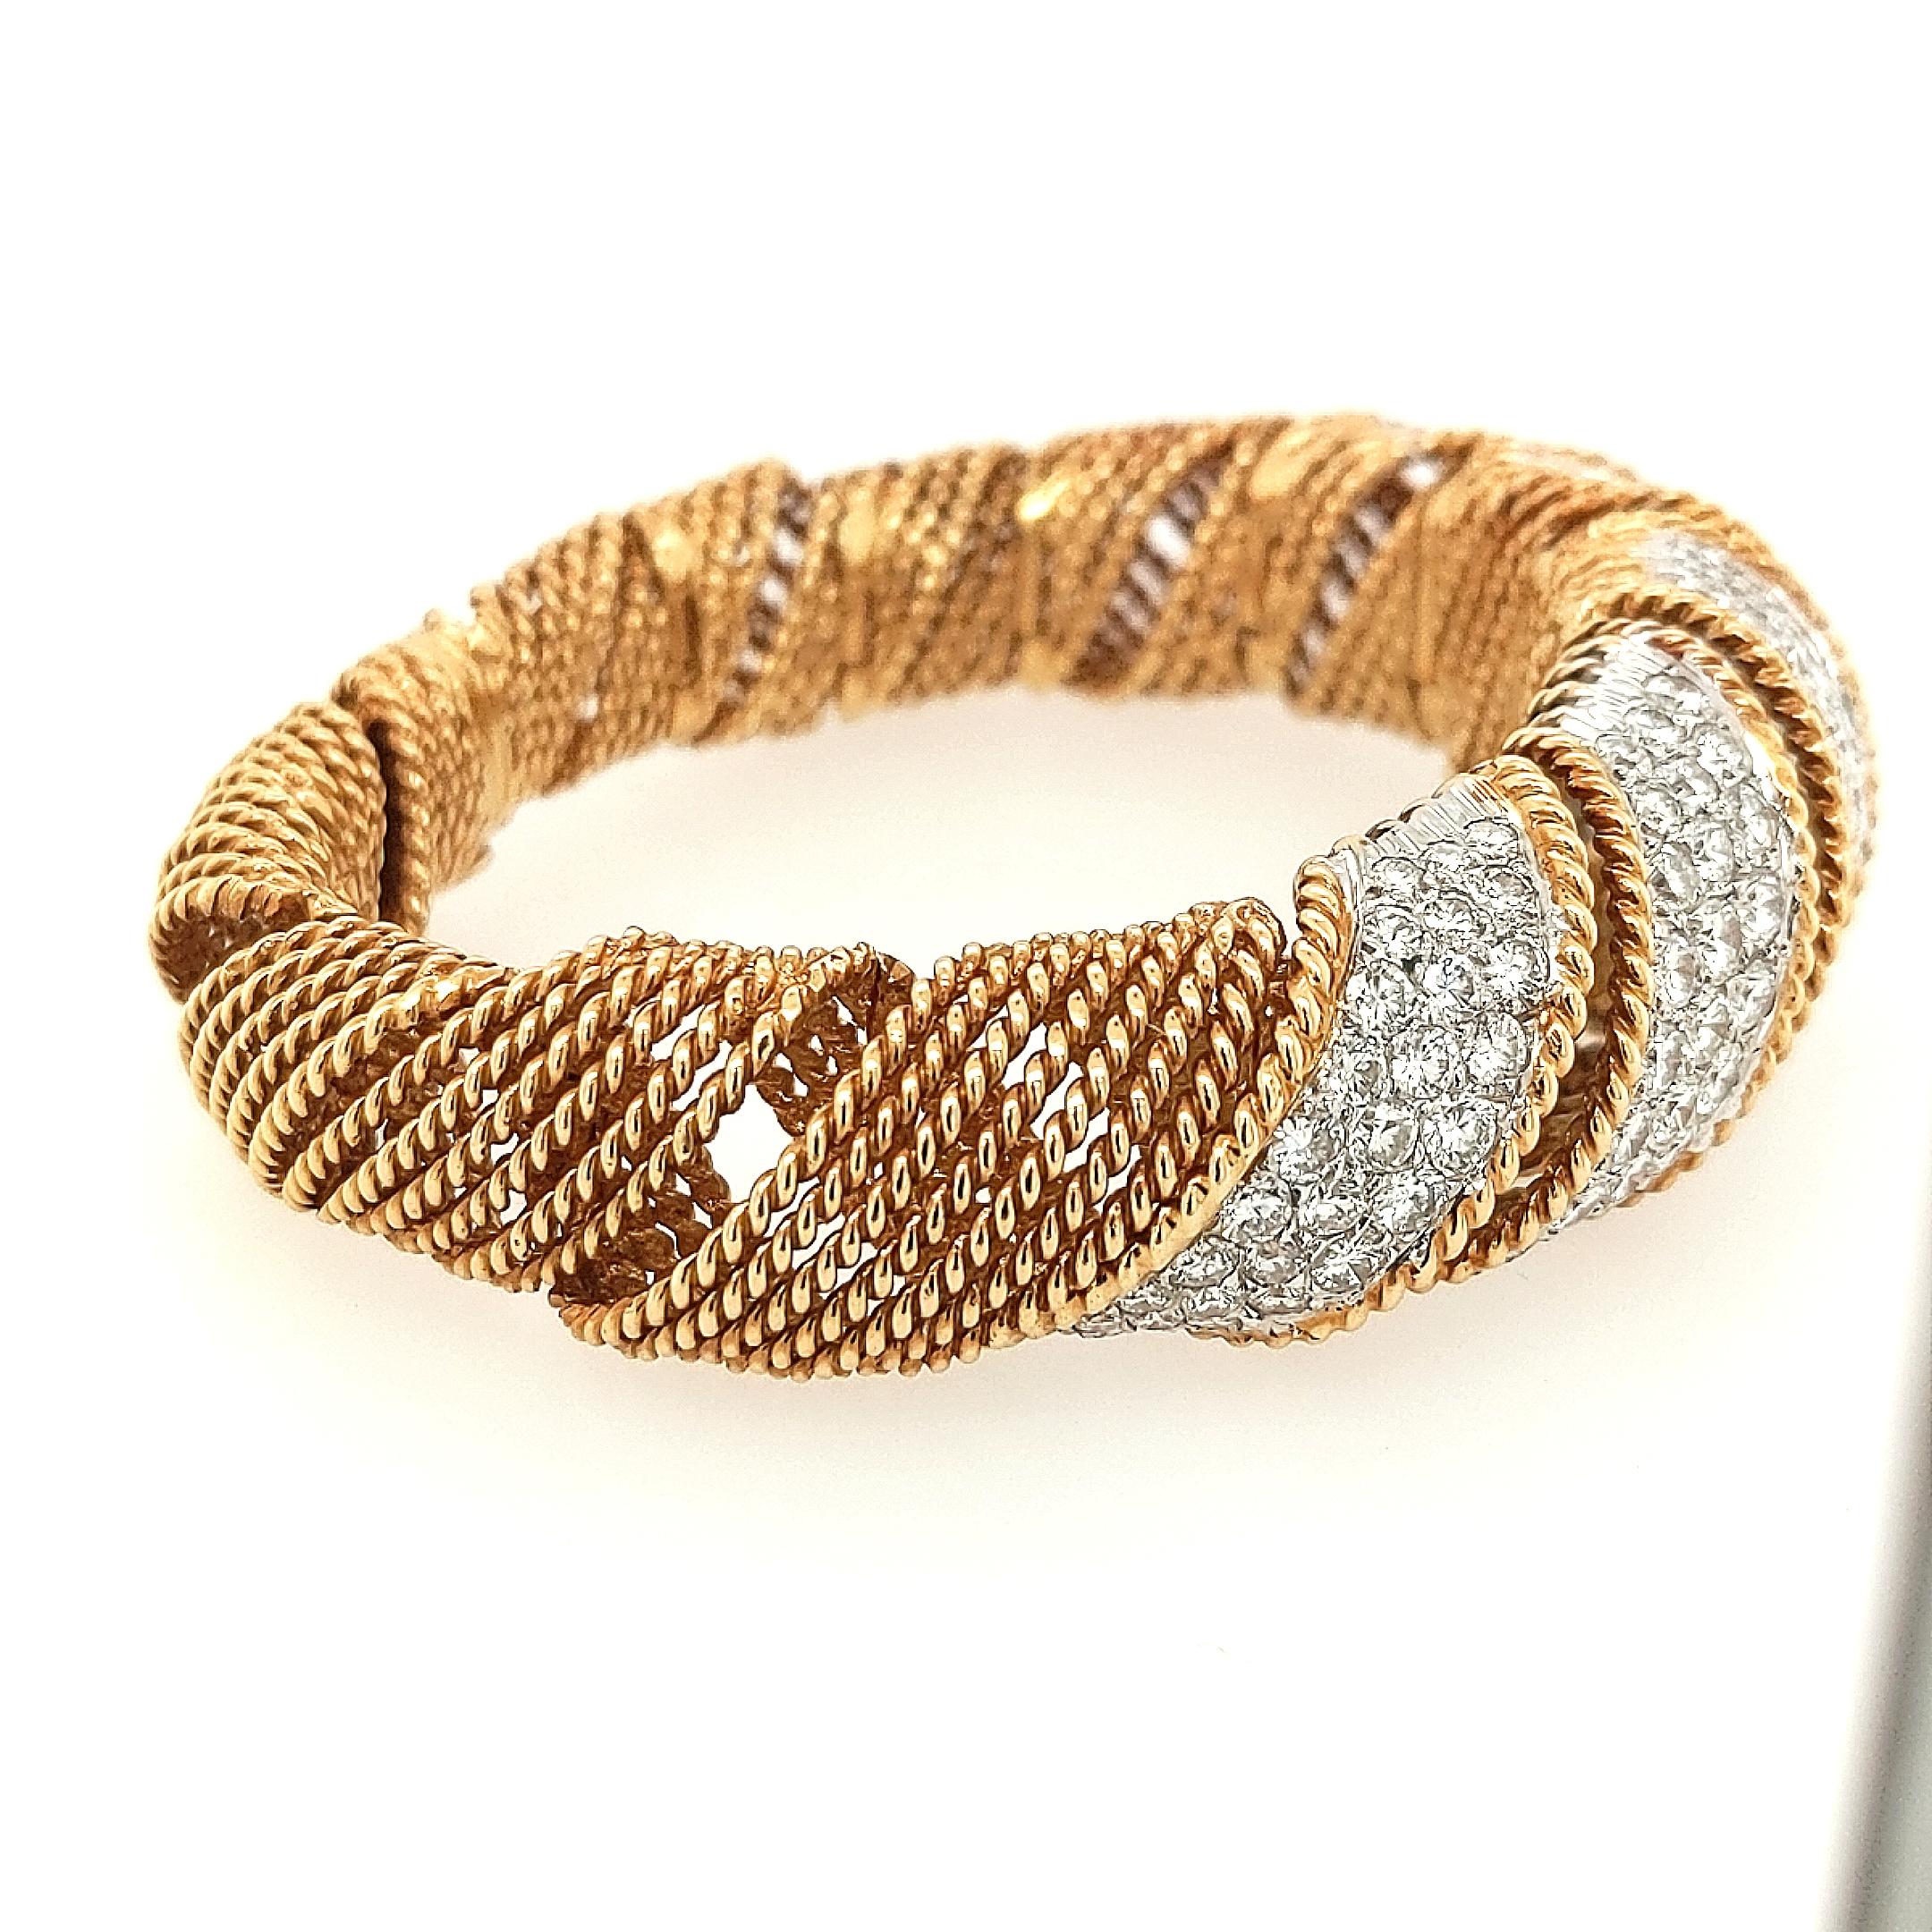 Round Cut Vintage 18k Yellow Gold Diamond Bracelet with 8.85cttw of Diamonds